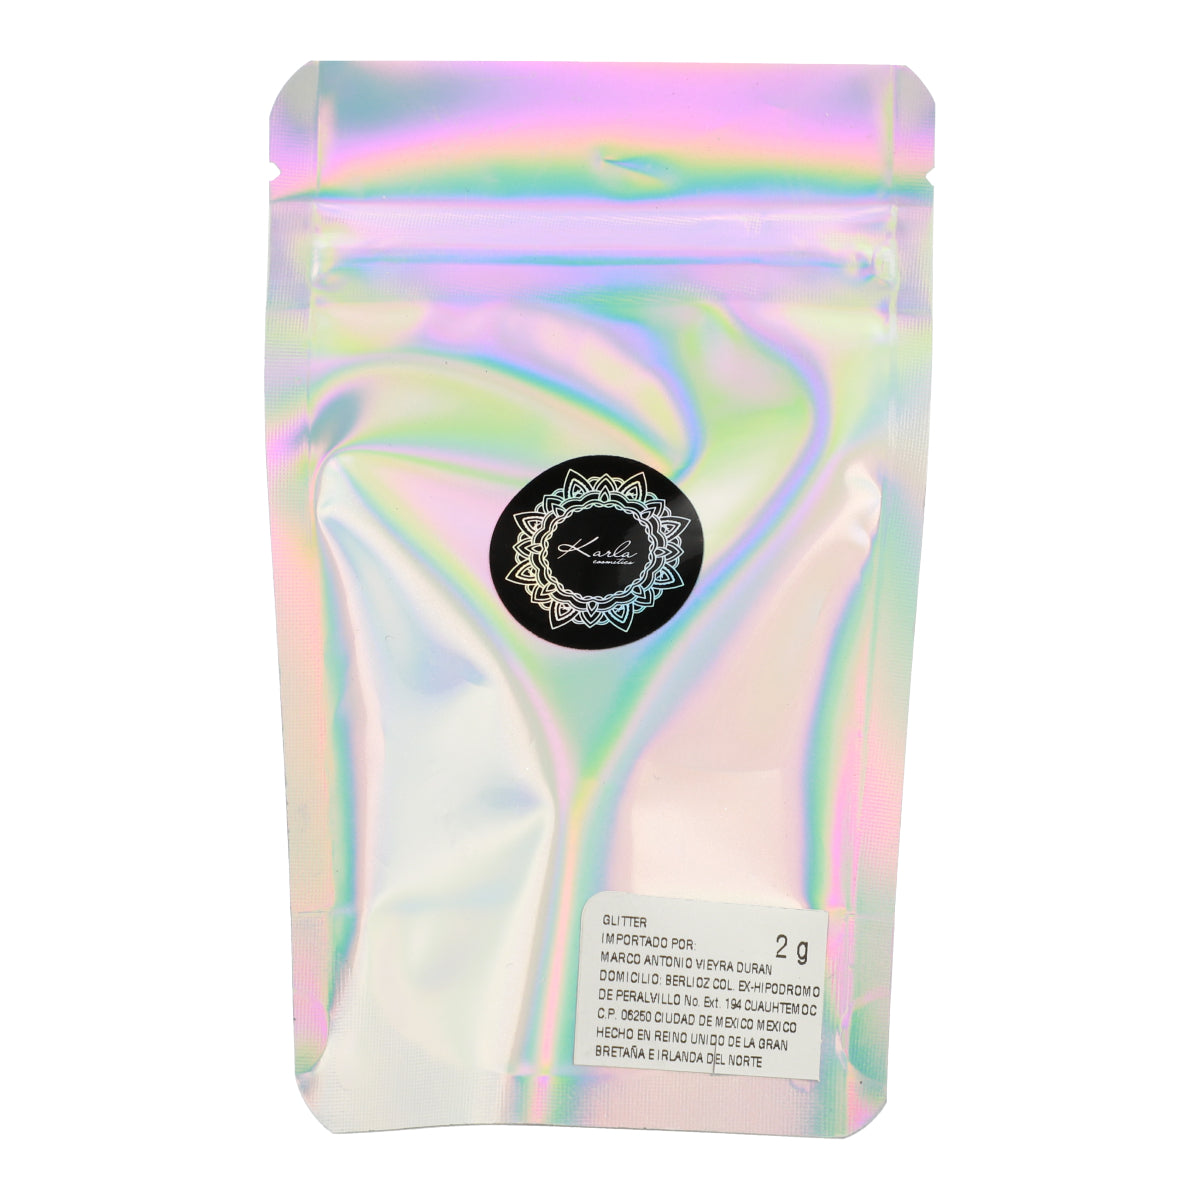 Merman Skin (Holographic) / Glitter Pot 2g